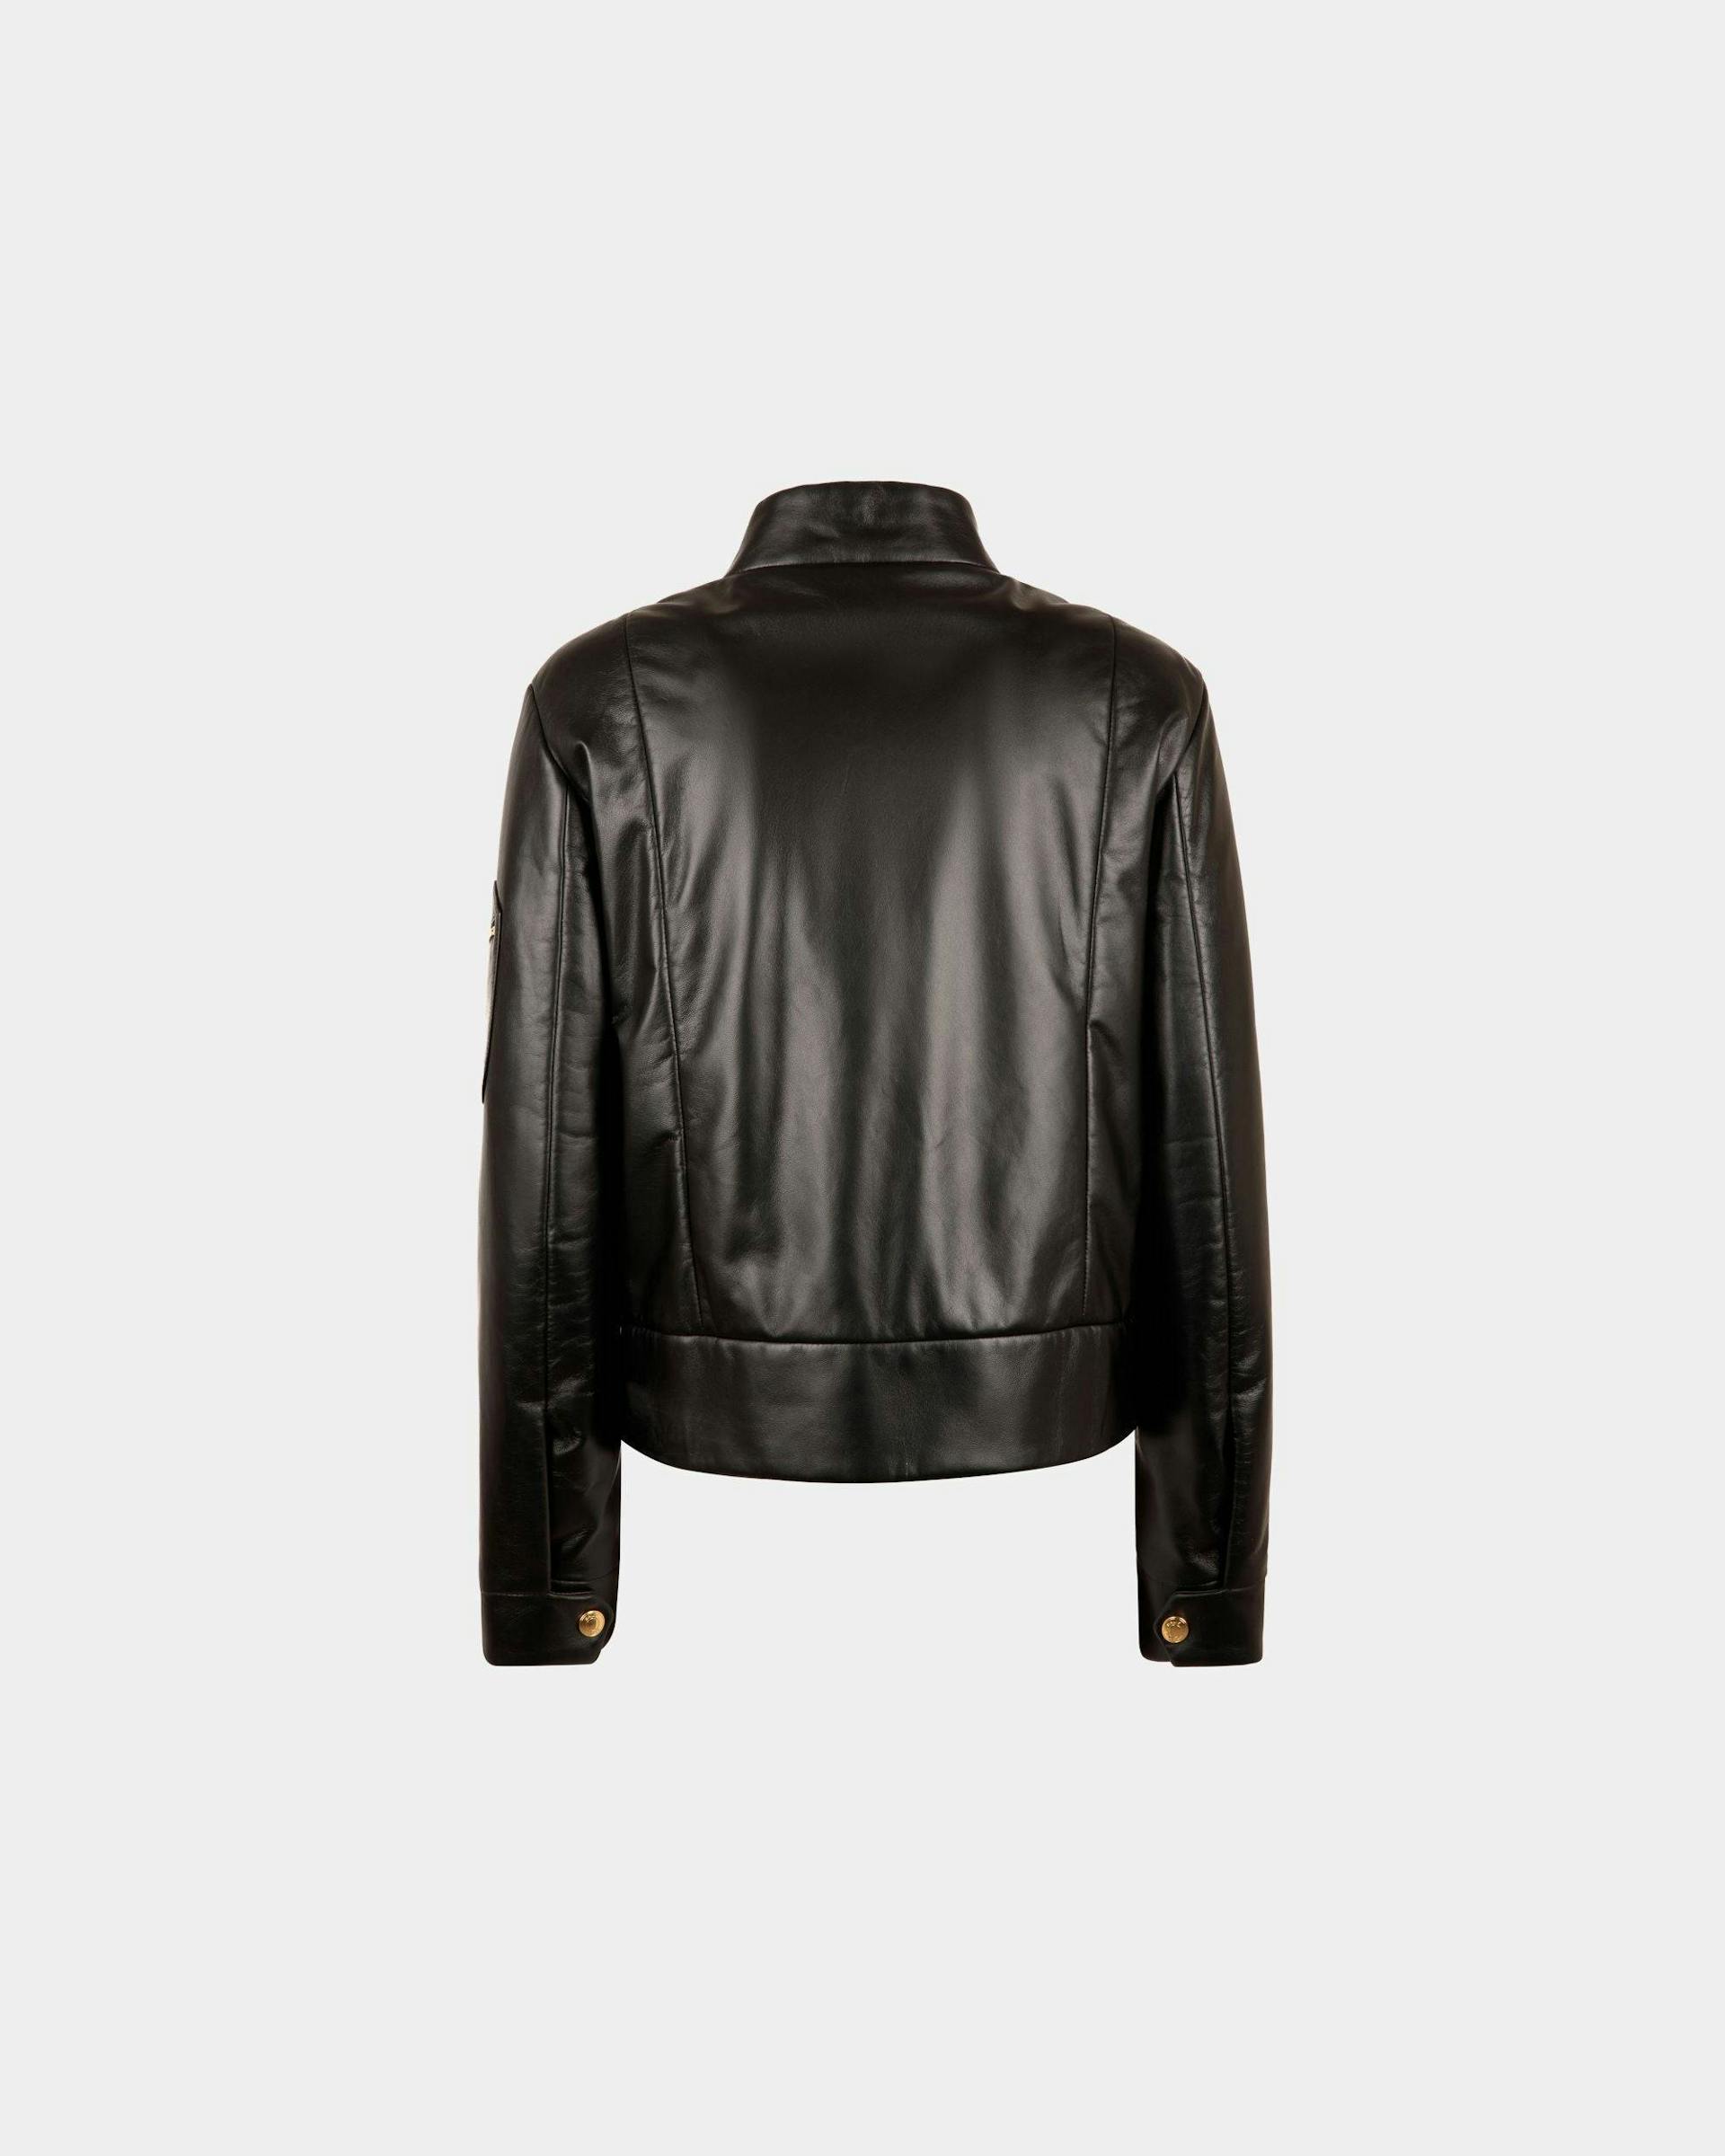 Women's Jacket In Black Leather | Bally | Still Life Back